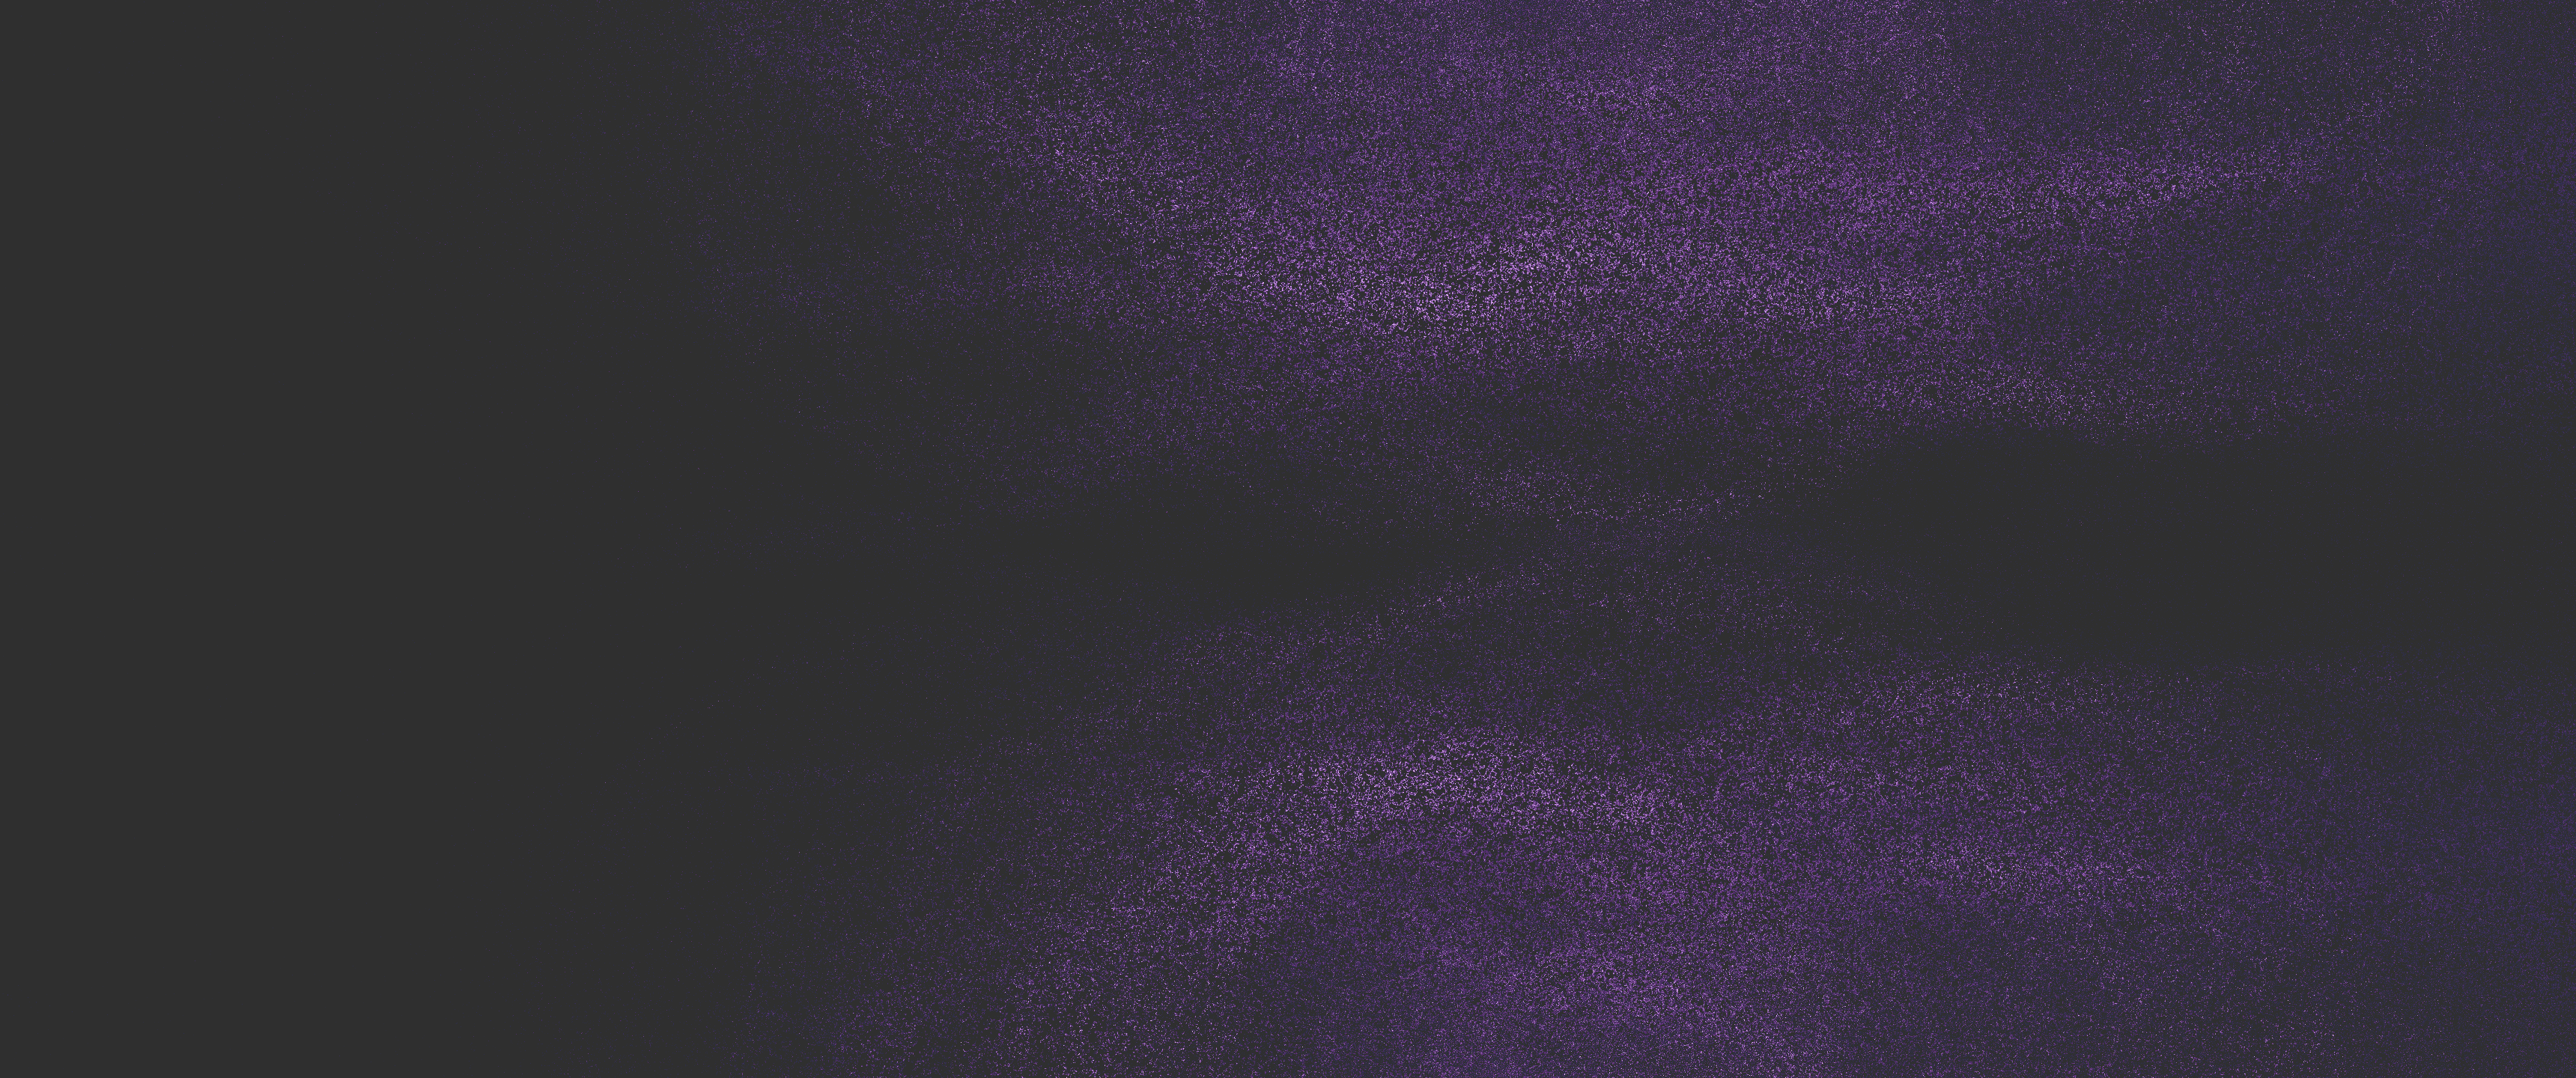 General 3440x1440 purple abstract dark ultrawide low light digital art